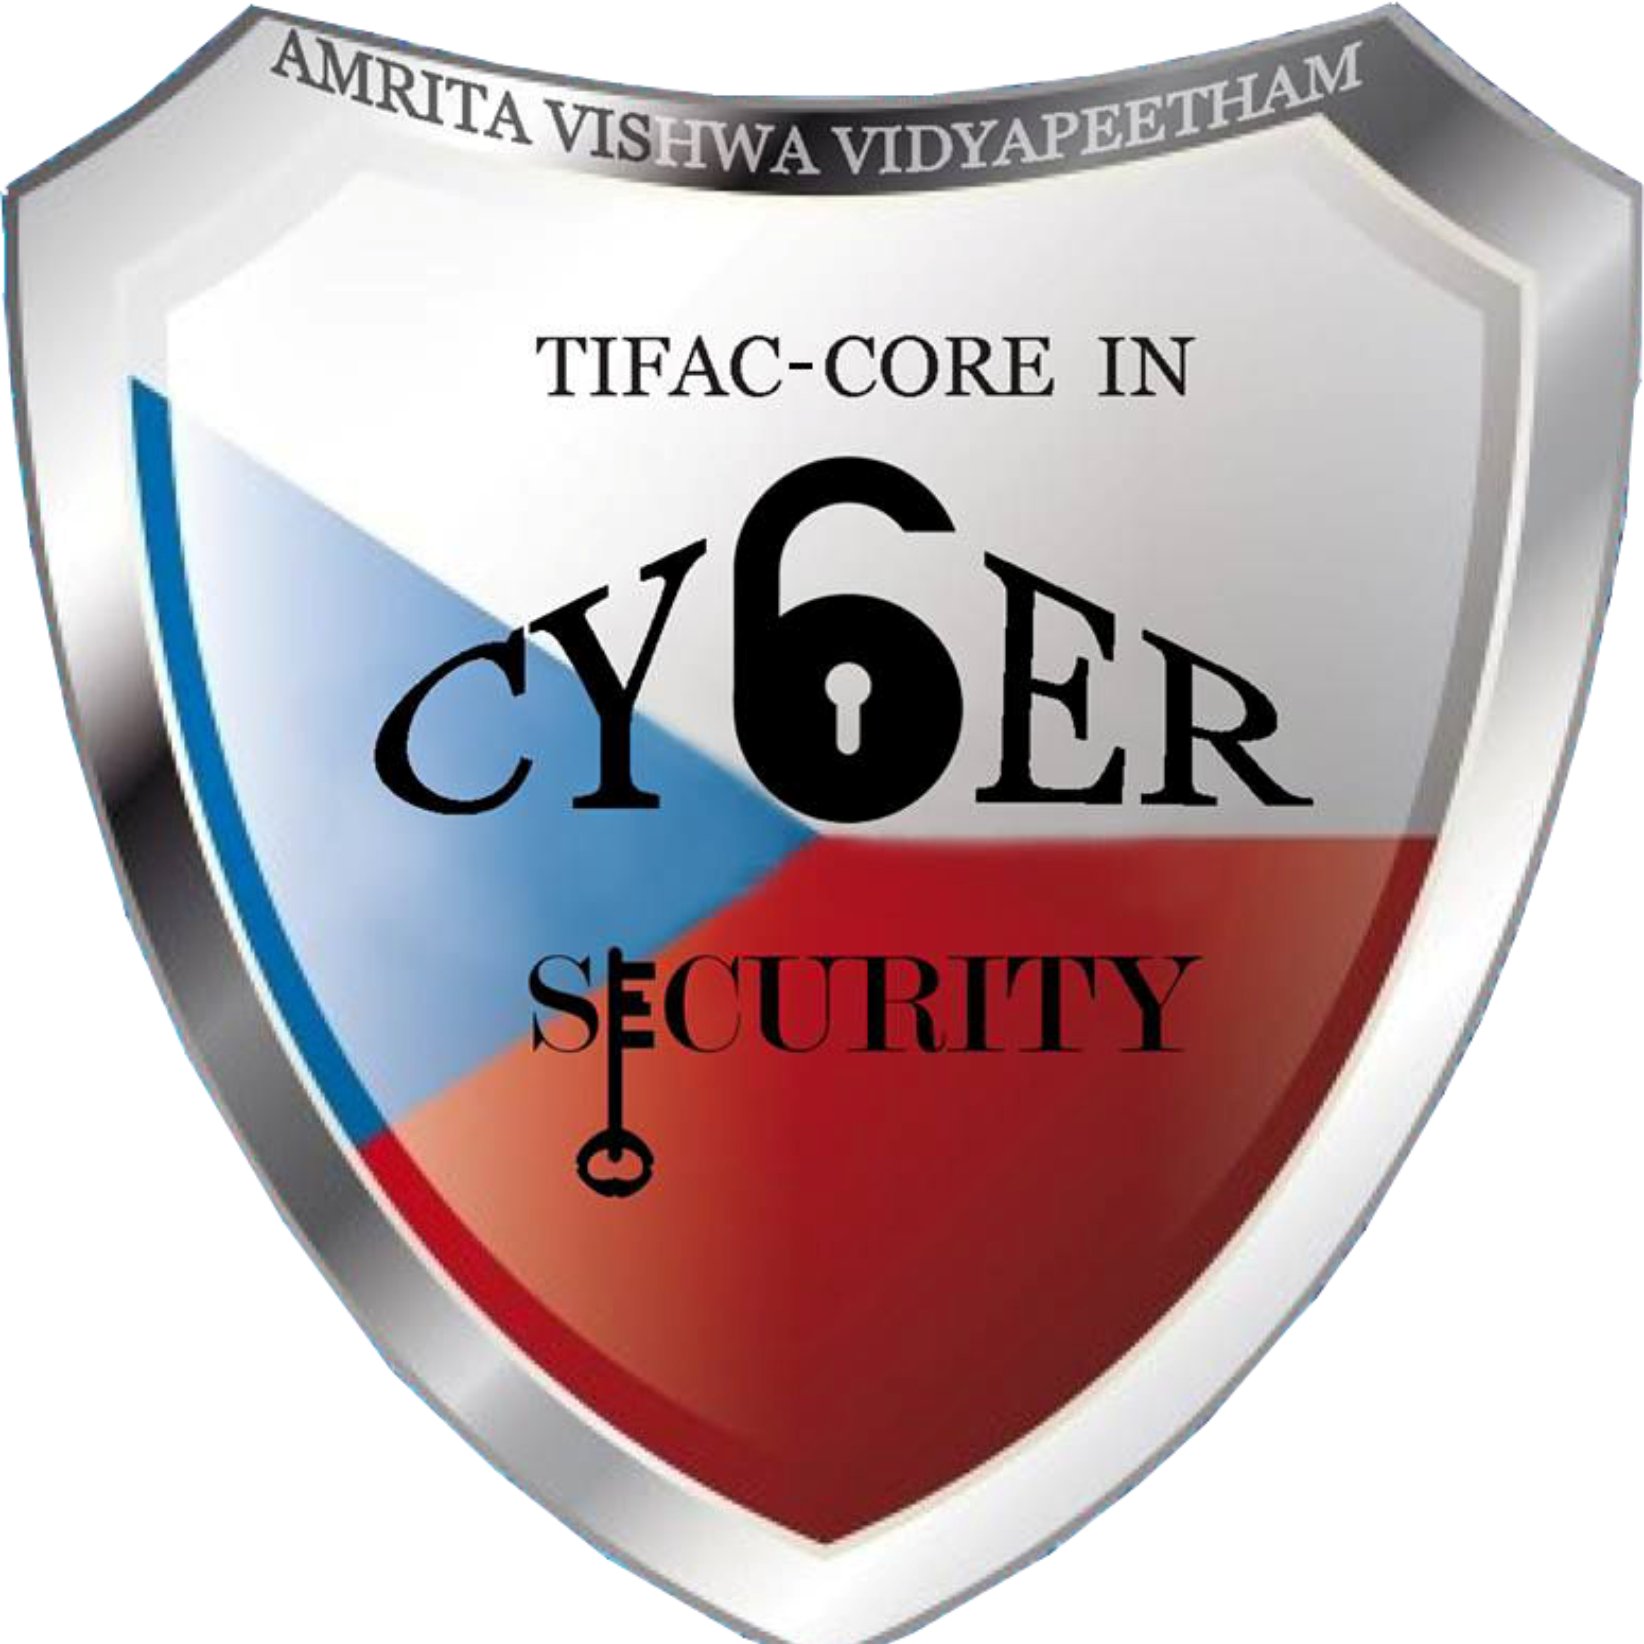 TIFAC-CORE in Cyber Security at Amrita Vishwa Vidyapeetham